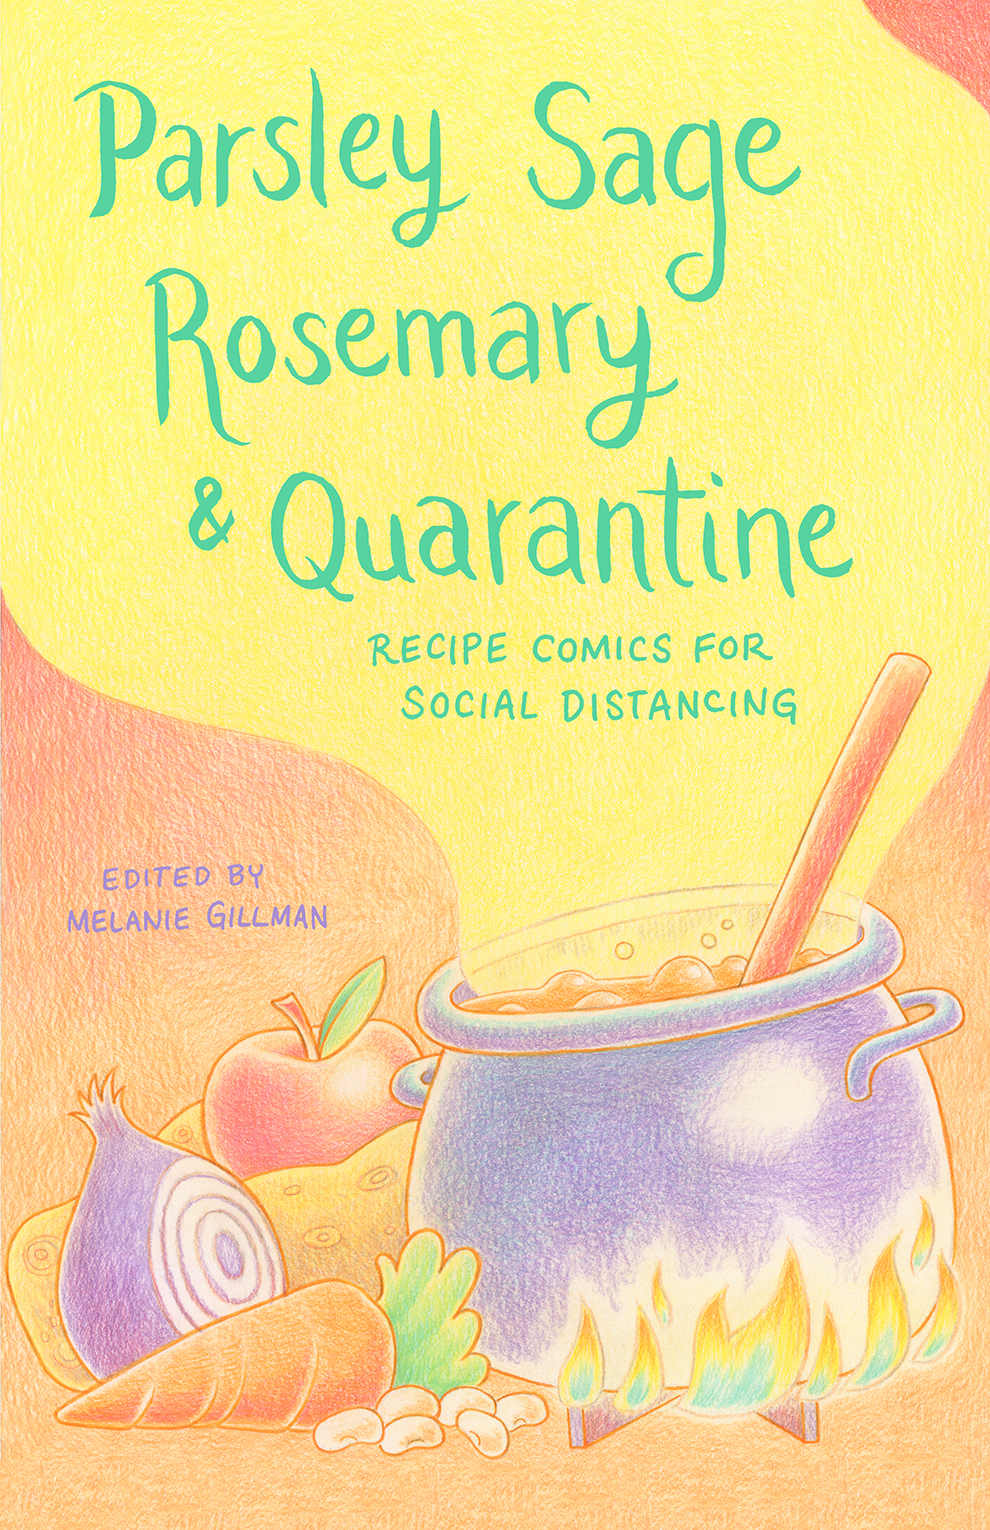 Parsley Sage Rosemary and Quarantine Comic Cookbook